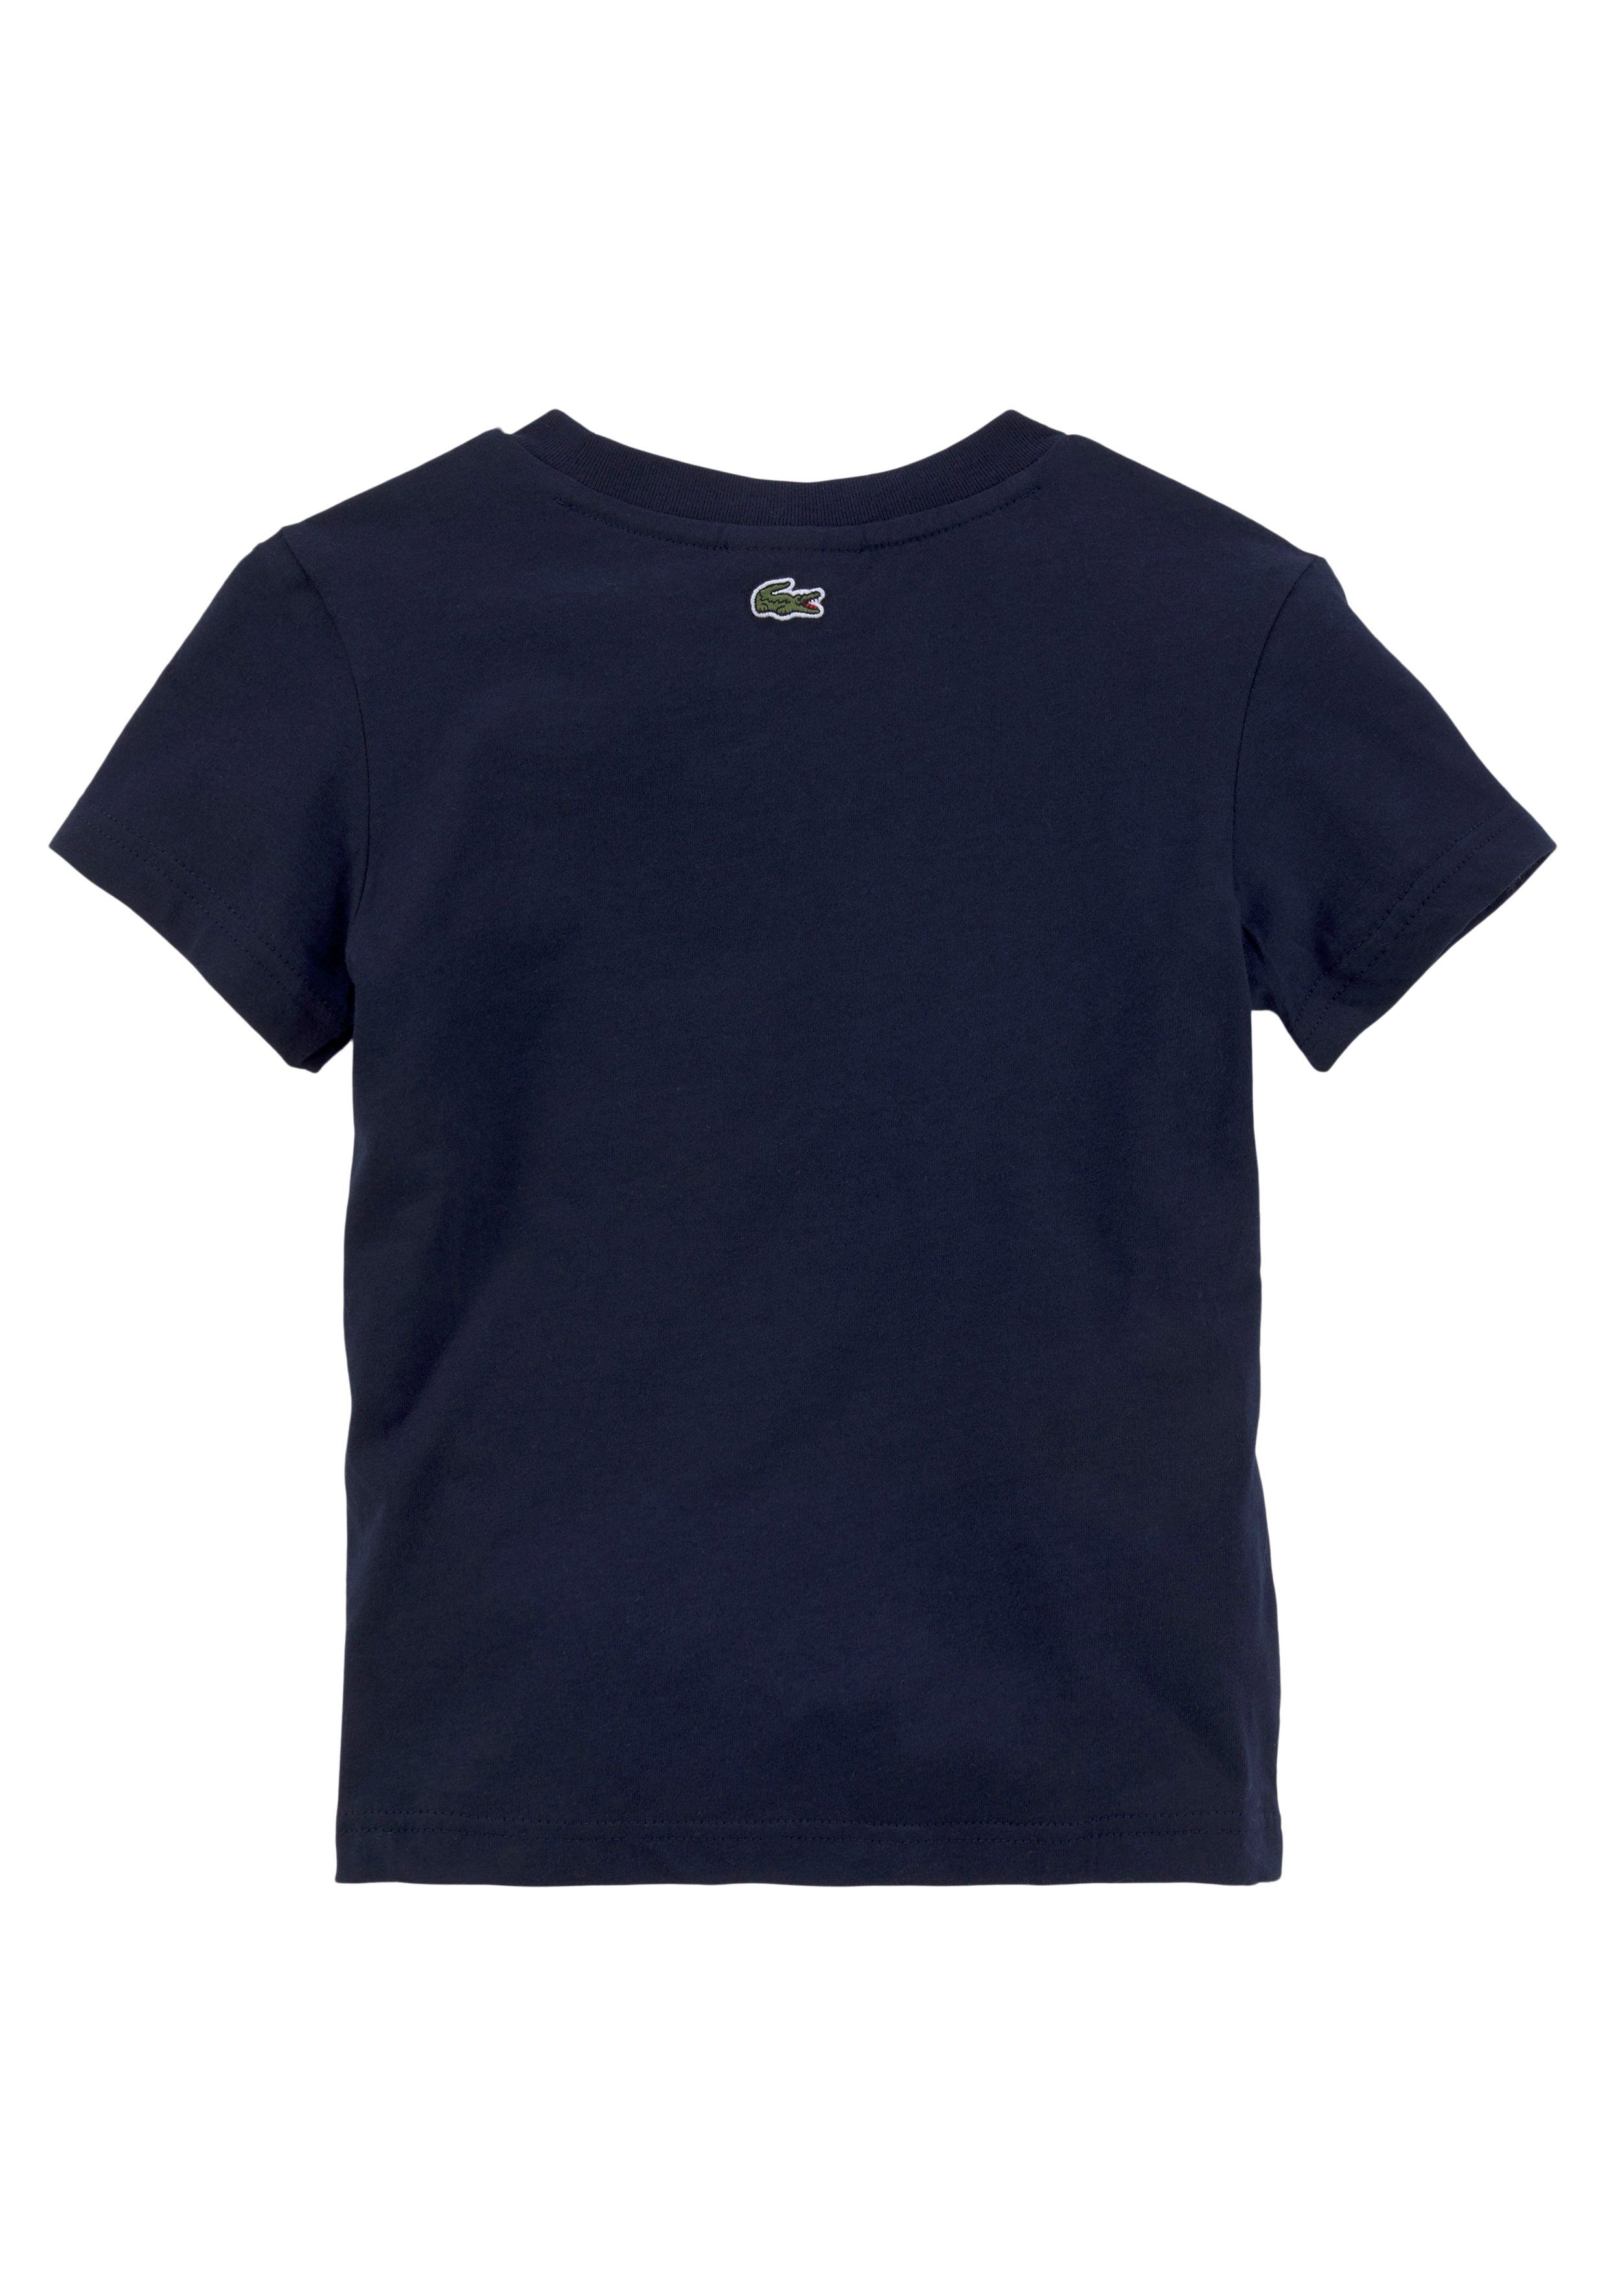 Lacoste T-Shirt navy blue Logodruck großem mit